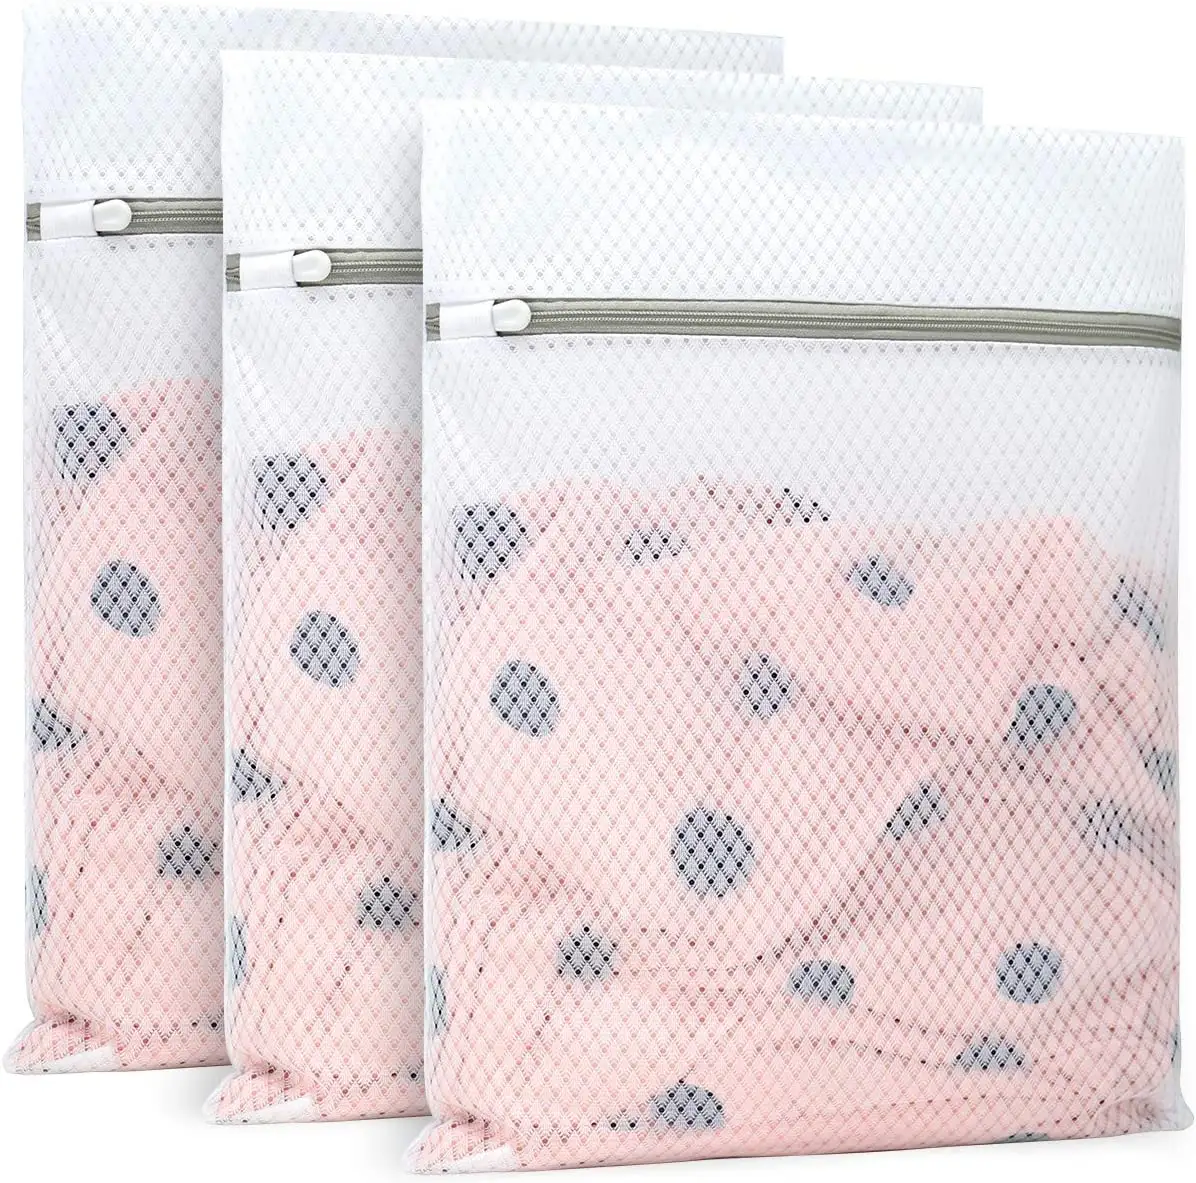 Hot sale & High-Quality Polyester Fiber Honeycomb Delicate Mesh Laundry Washing machine underwear storage bag